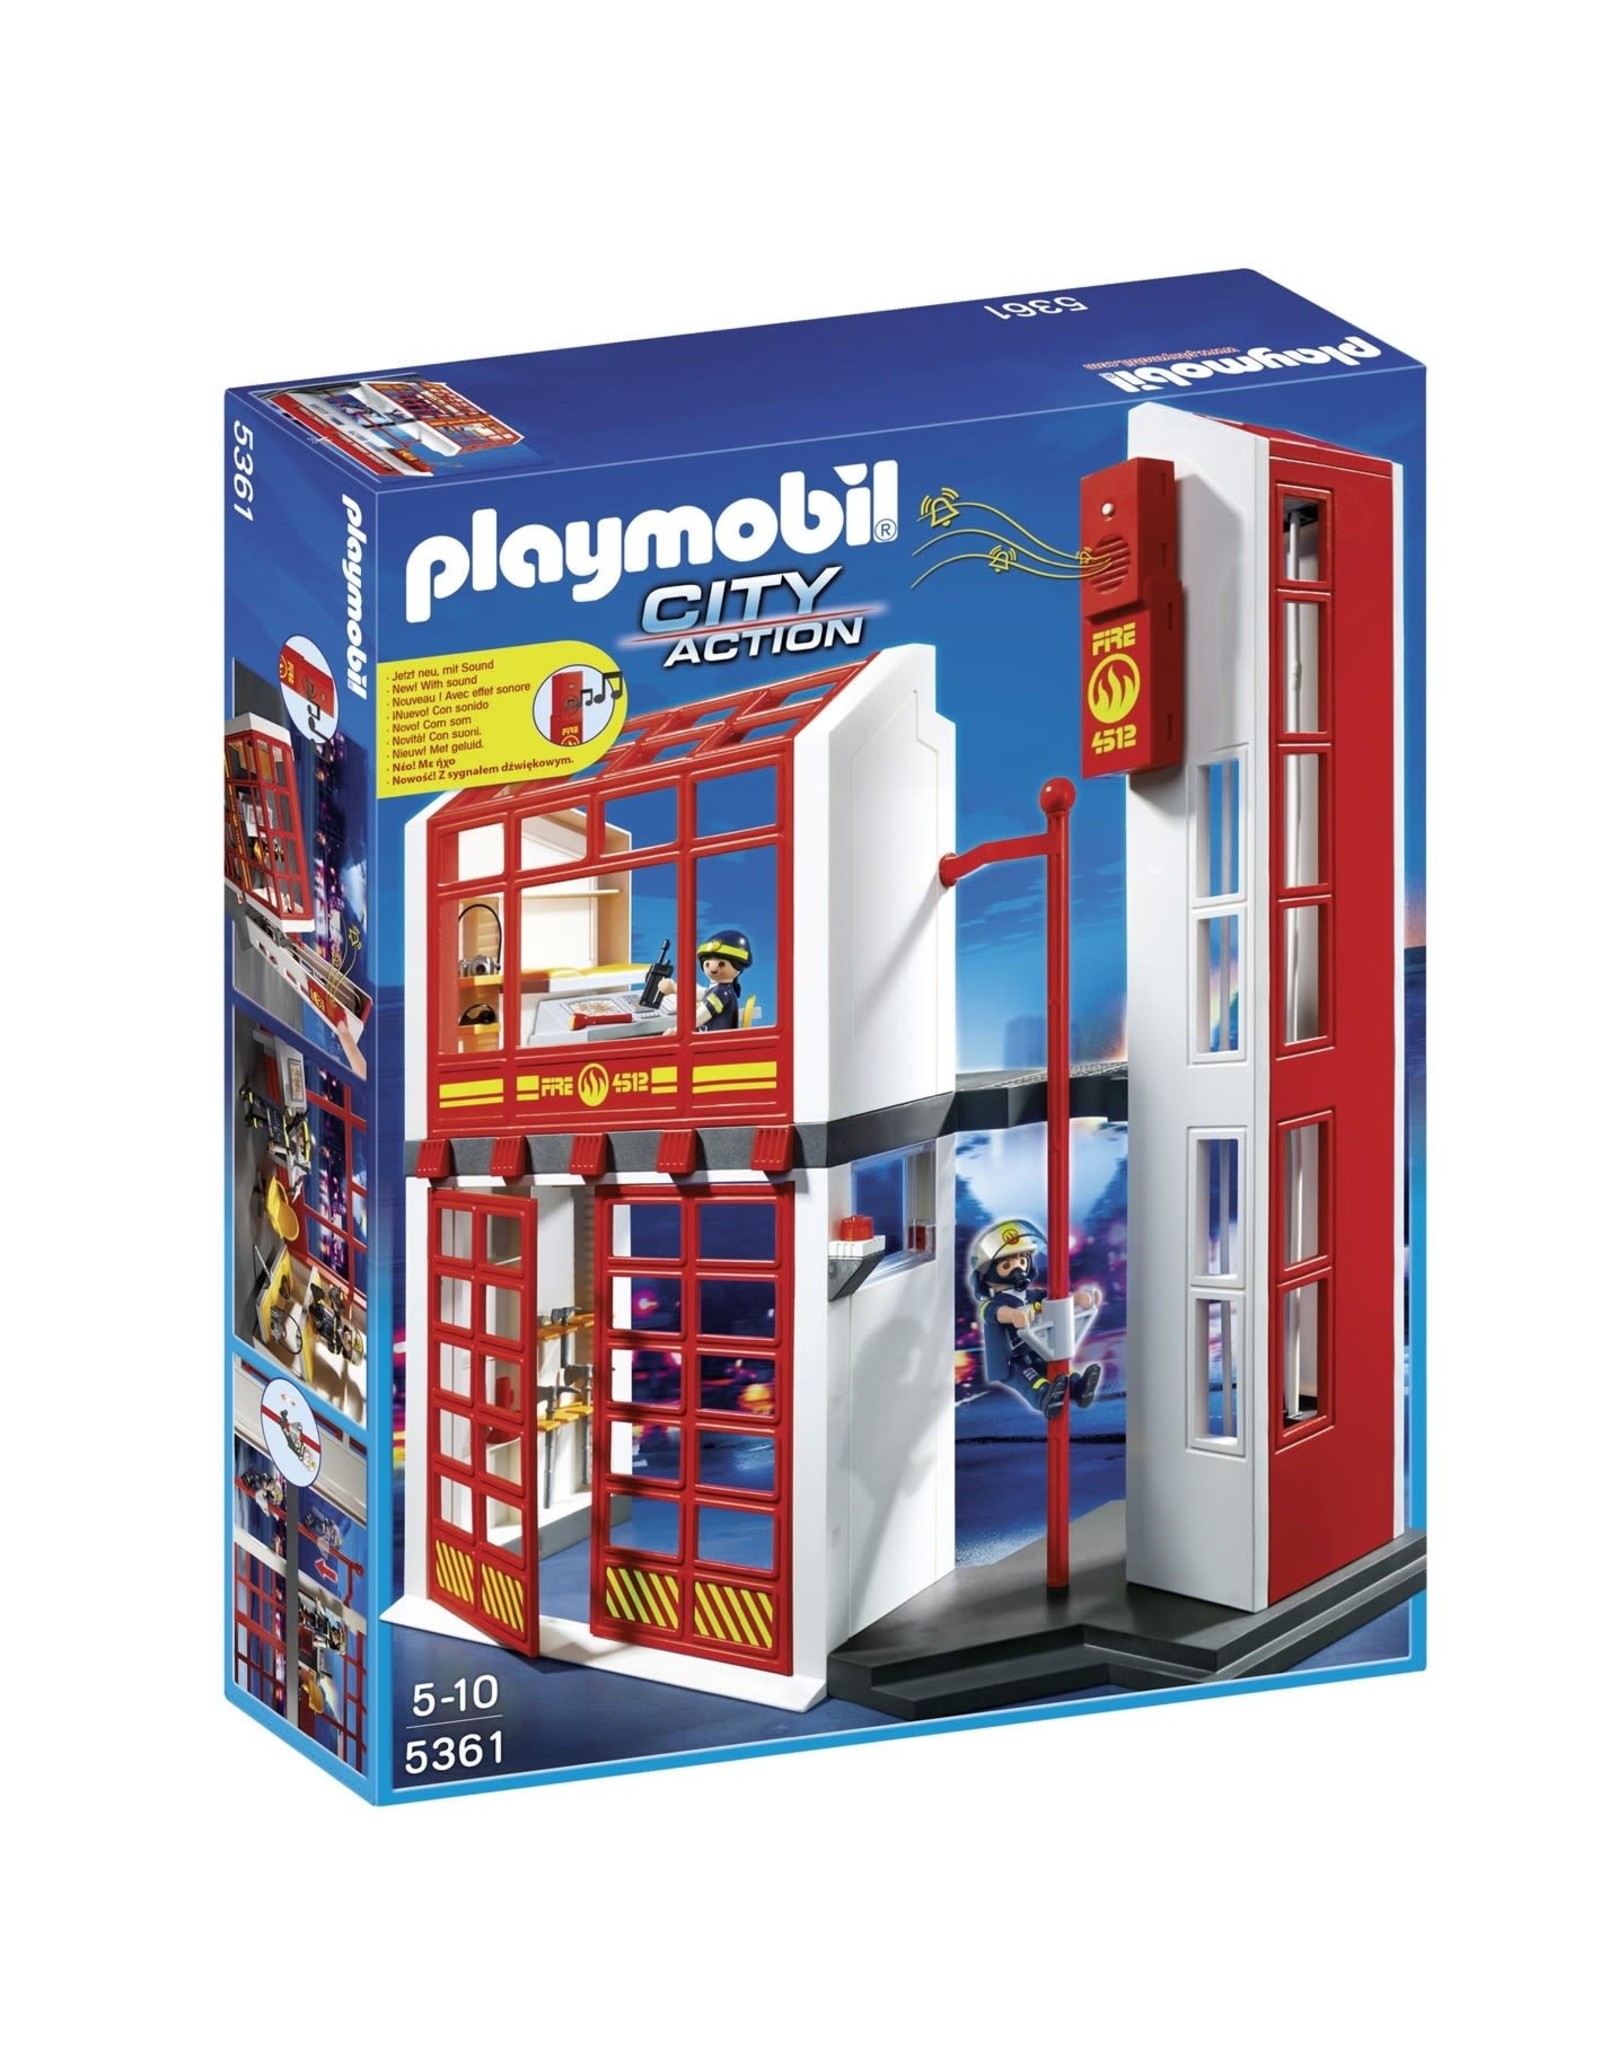 Playmobil Playmobil City Action 5361 Brandweerkazerne met Sirene